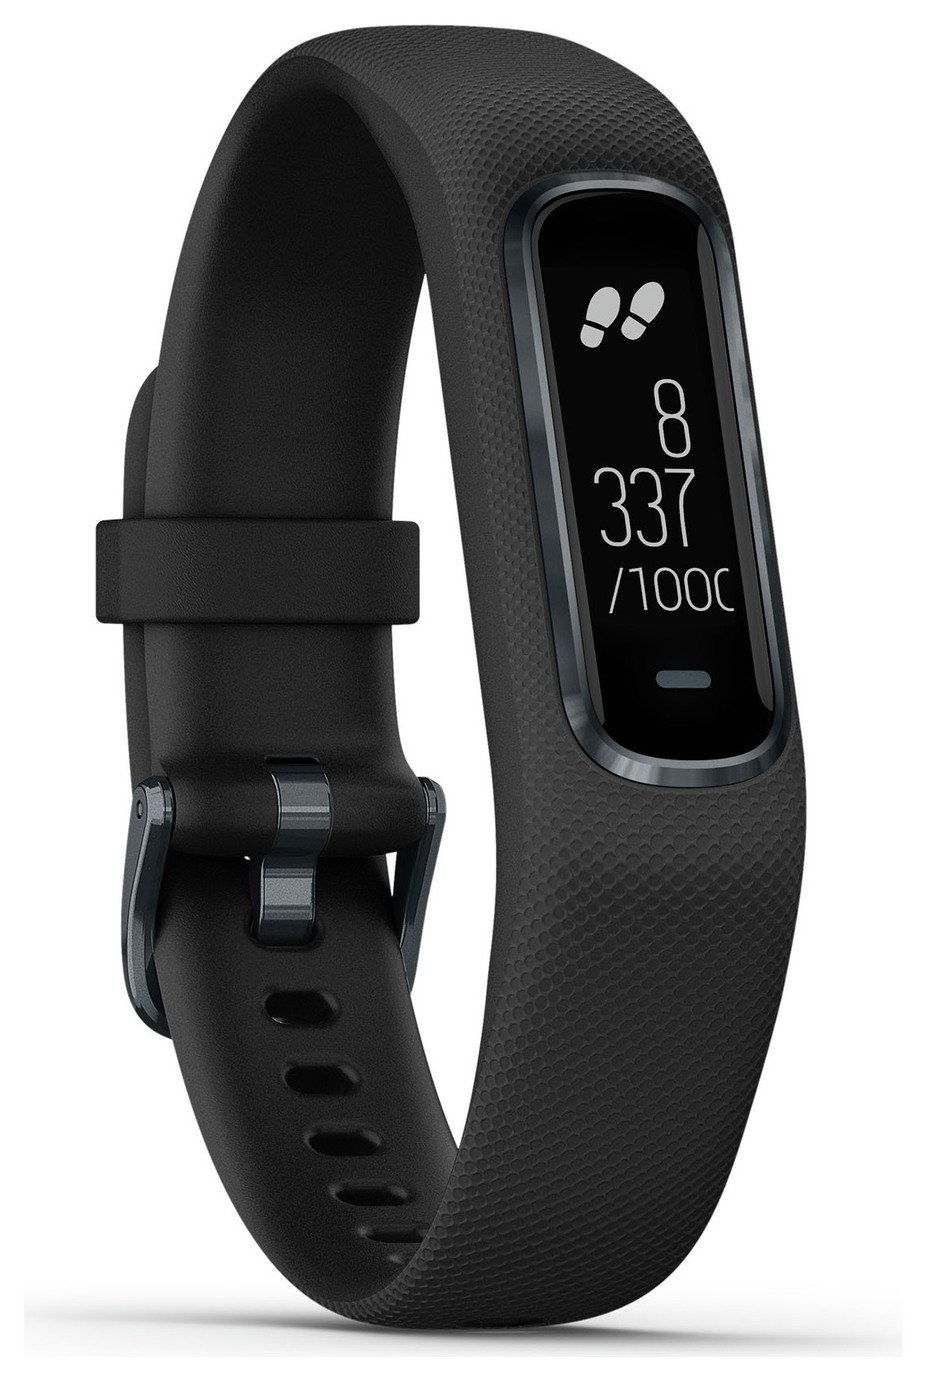 Garmin Vivosmart 4 Large Smart Watch review